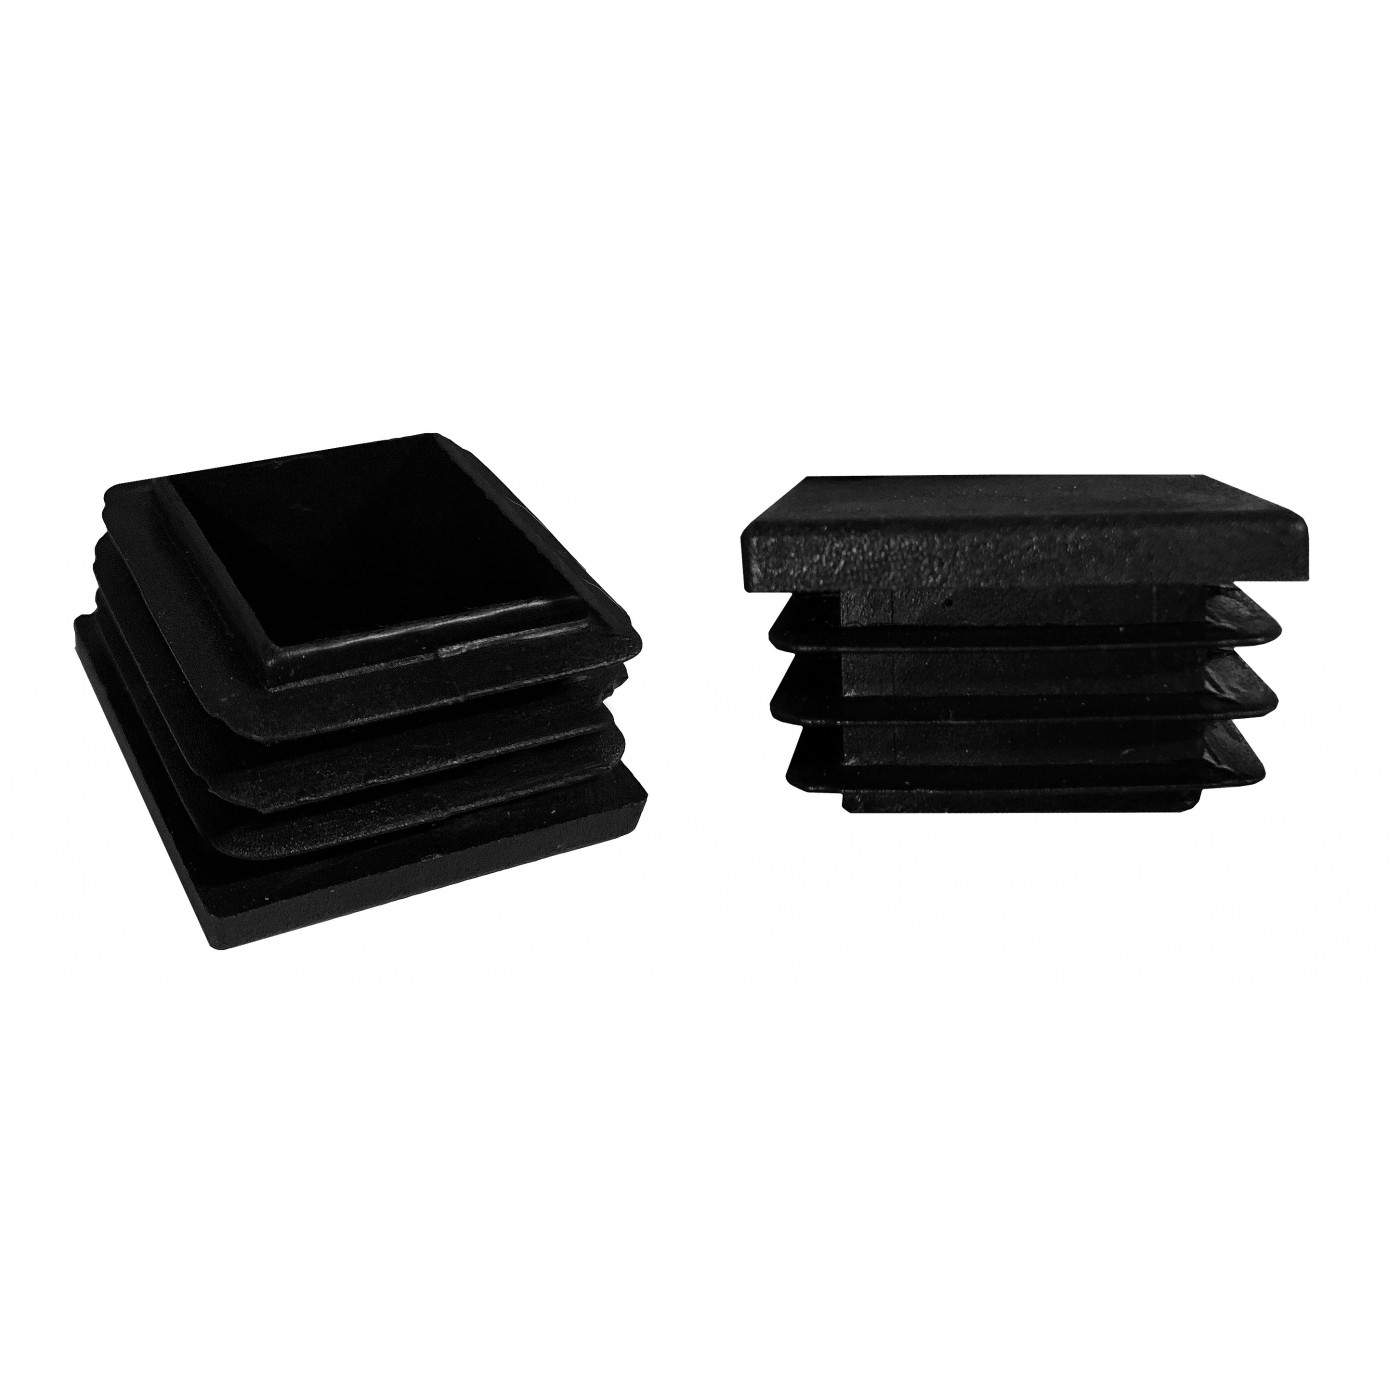 Set of 50 chair leg caps (F13/E18/D19, black)